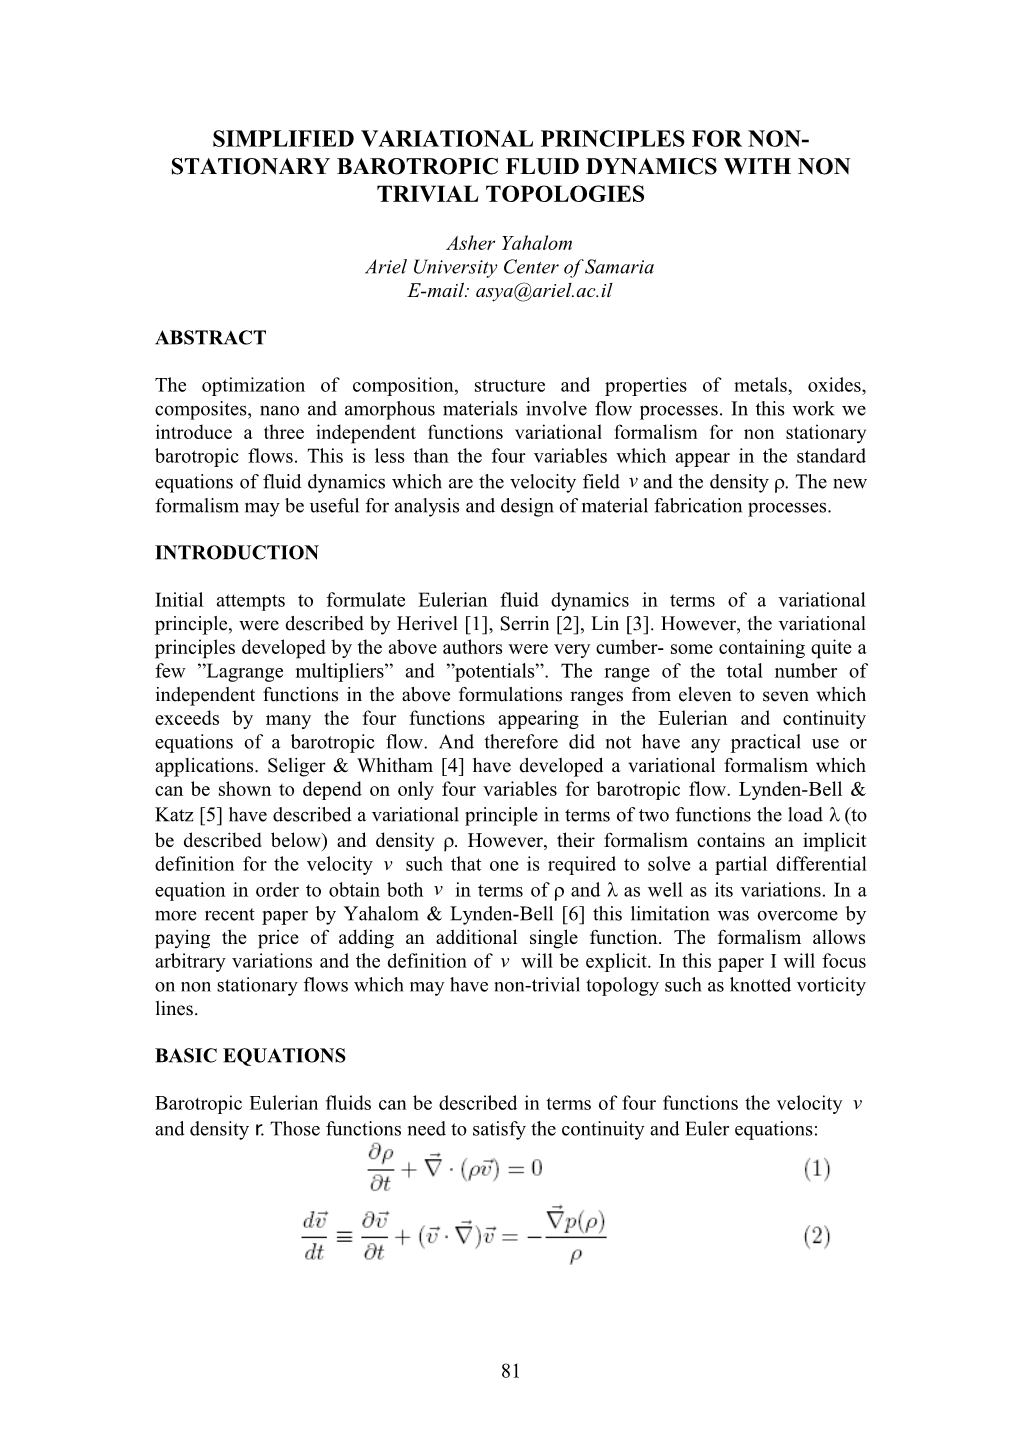 Simplified Variational Principles for Barotropic Fluid Dynamics